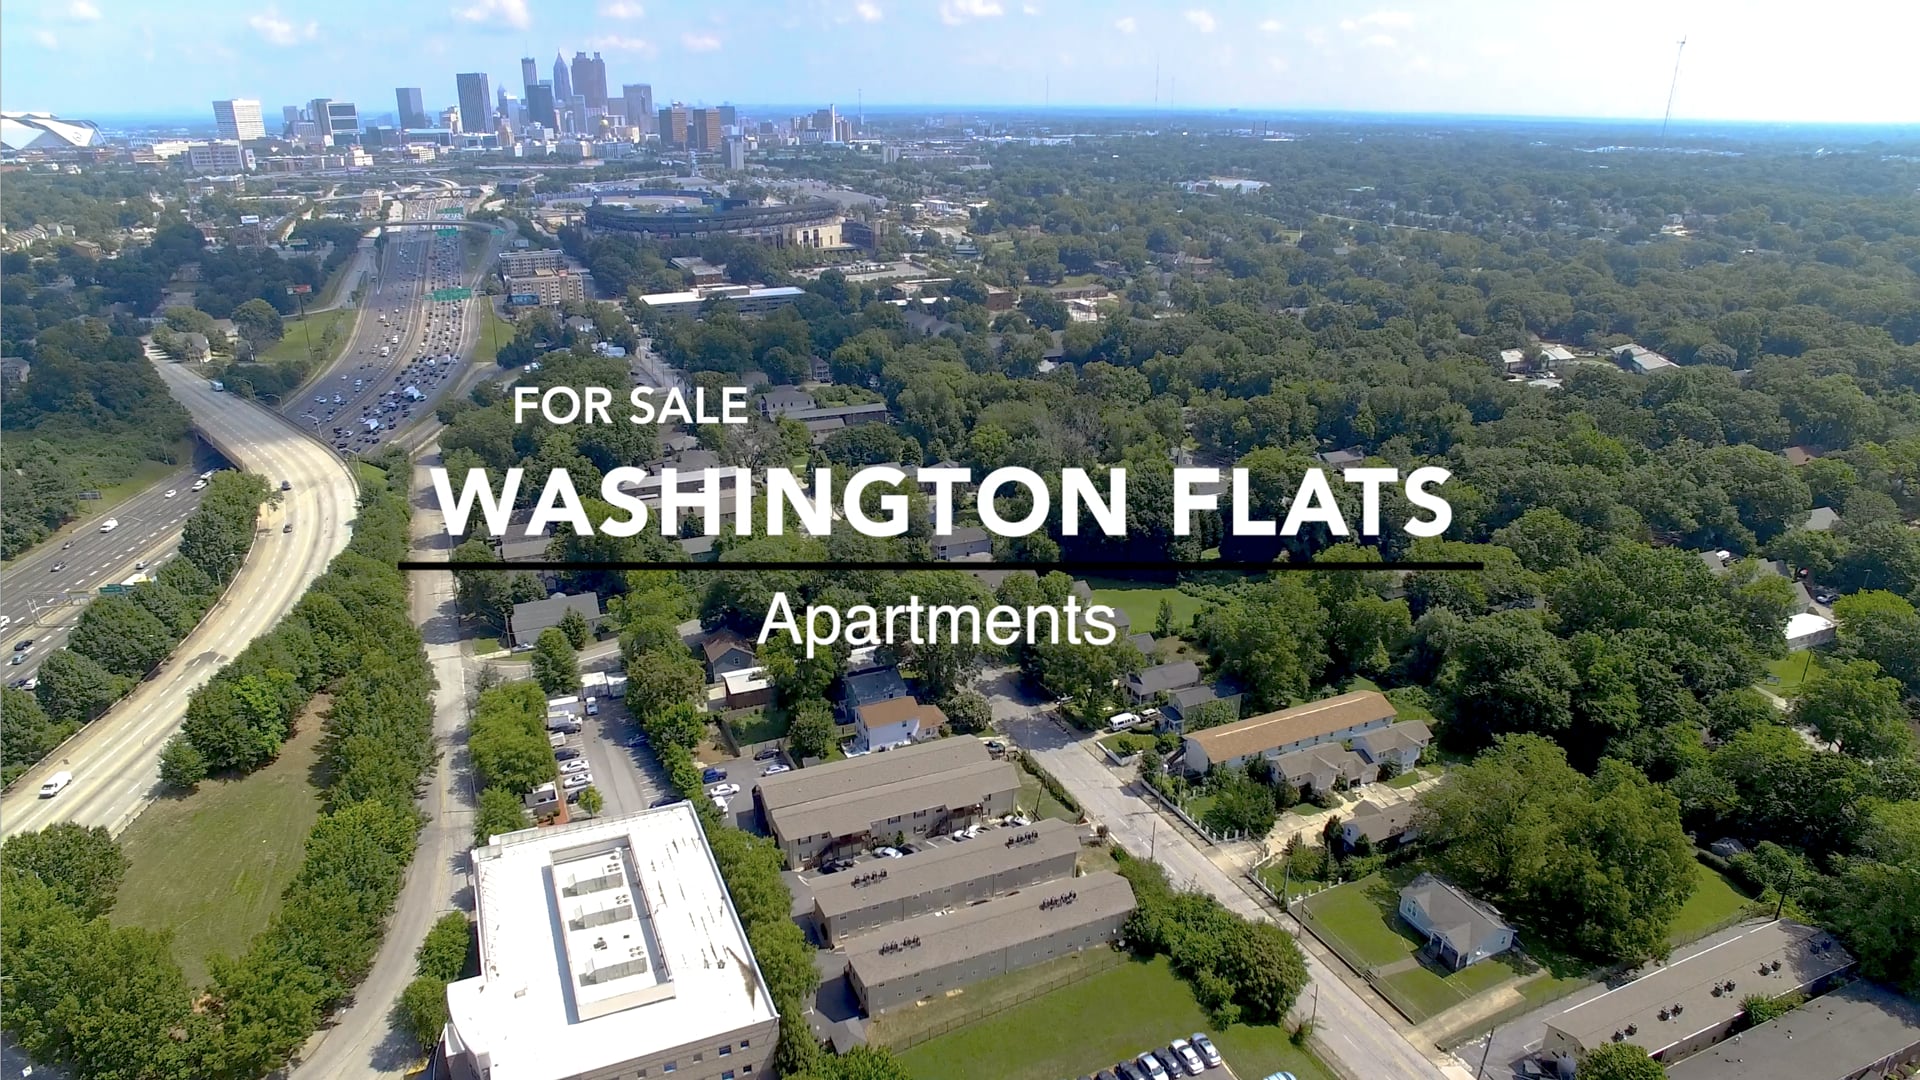 Washington Flats - Atlanta Apartments for Sale